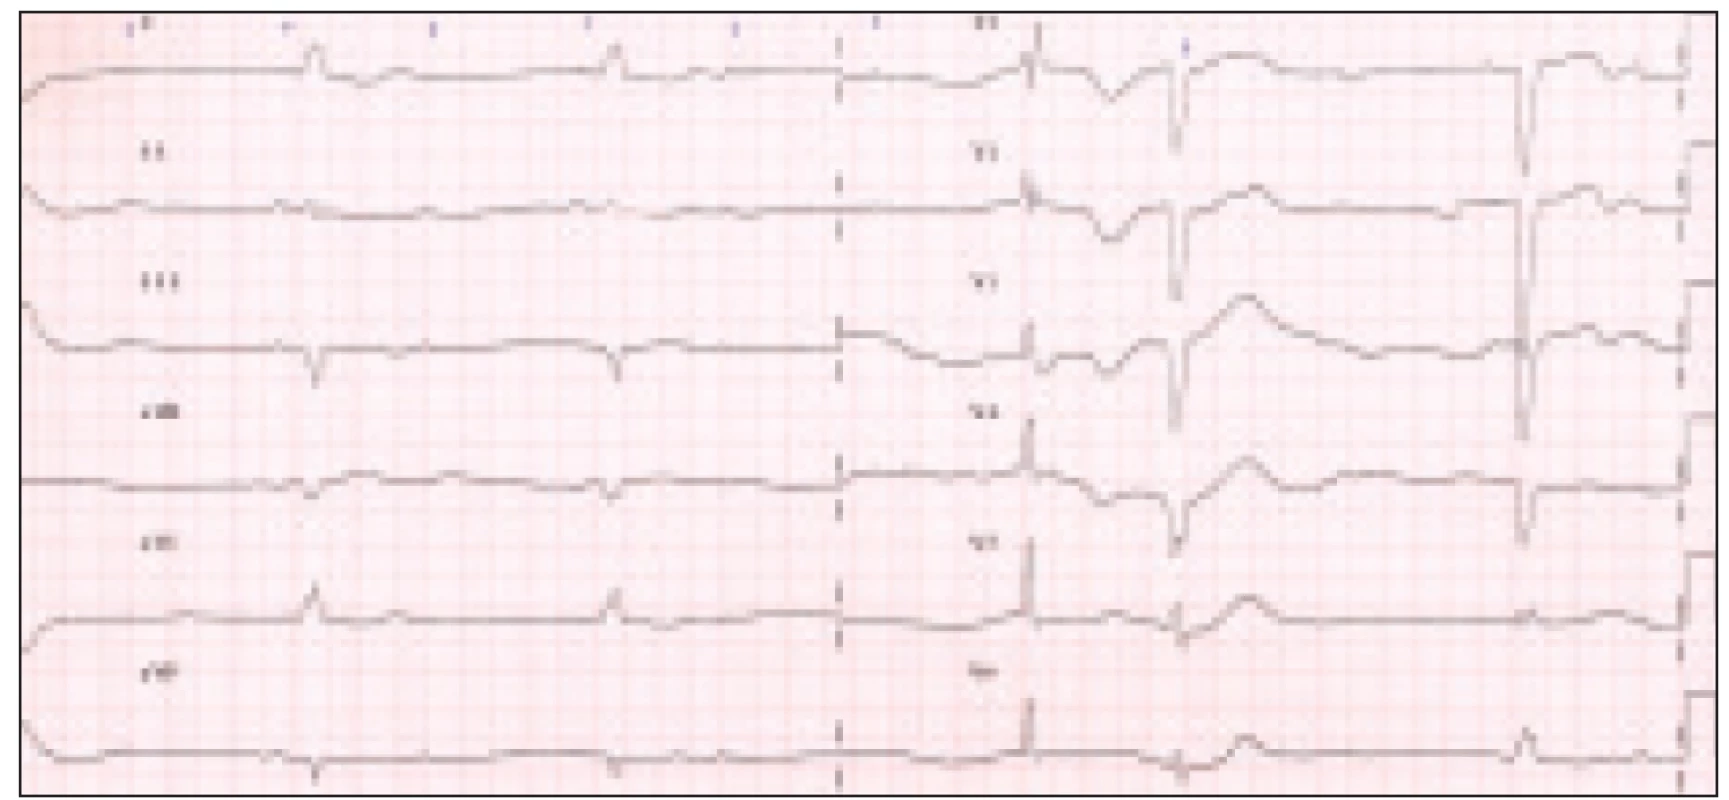 Vstupní EKG s patrnou atrioventrikulární blokádou III. st. se širokými QRS komplexy a bradykardií 20–32/min.